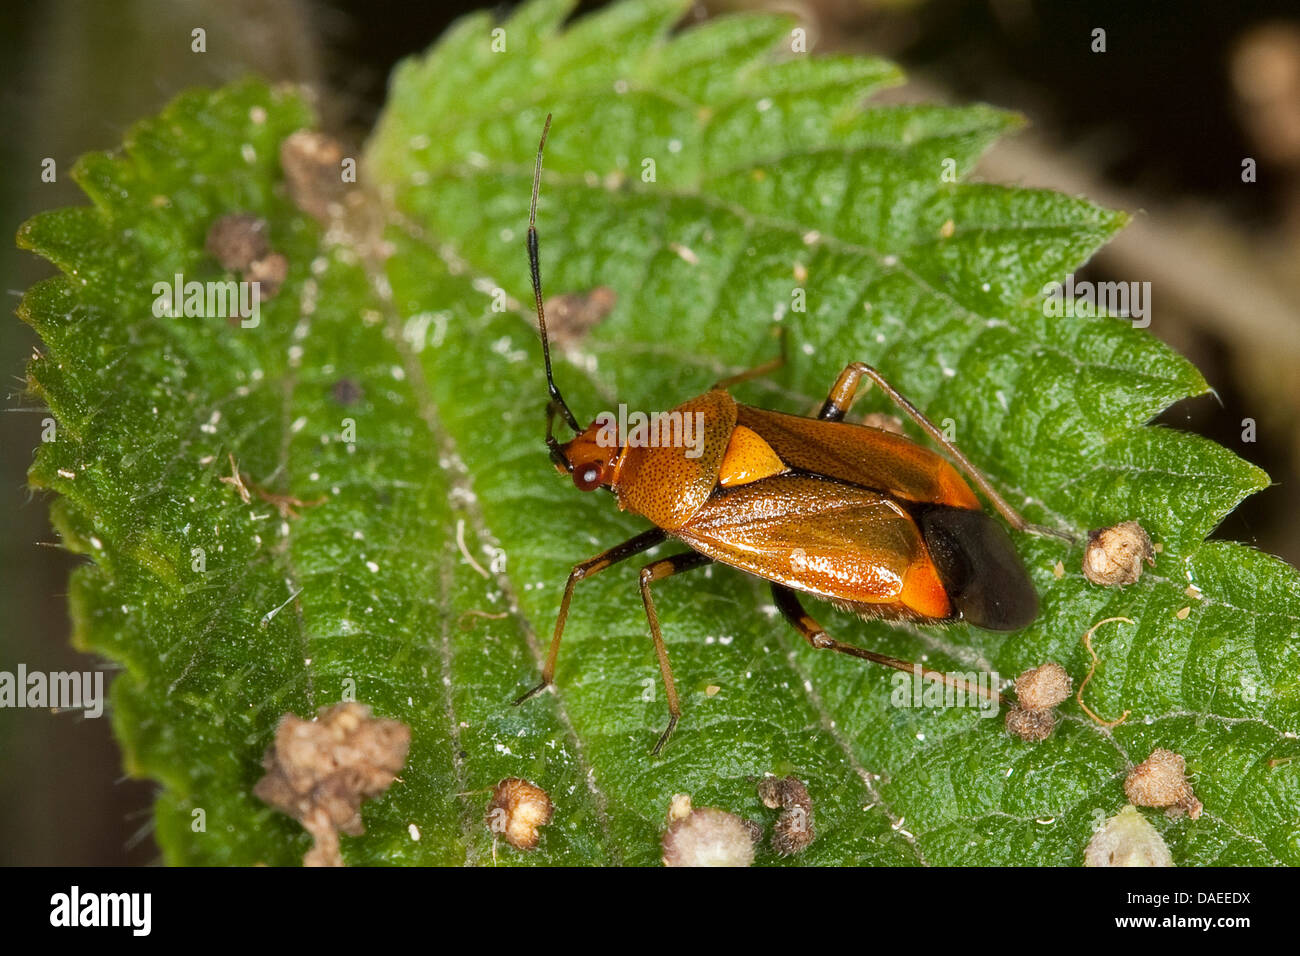 Capsid bugs (Deraeocoris ruber), on a leaf of stinging nettle, Germany Stock Photo